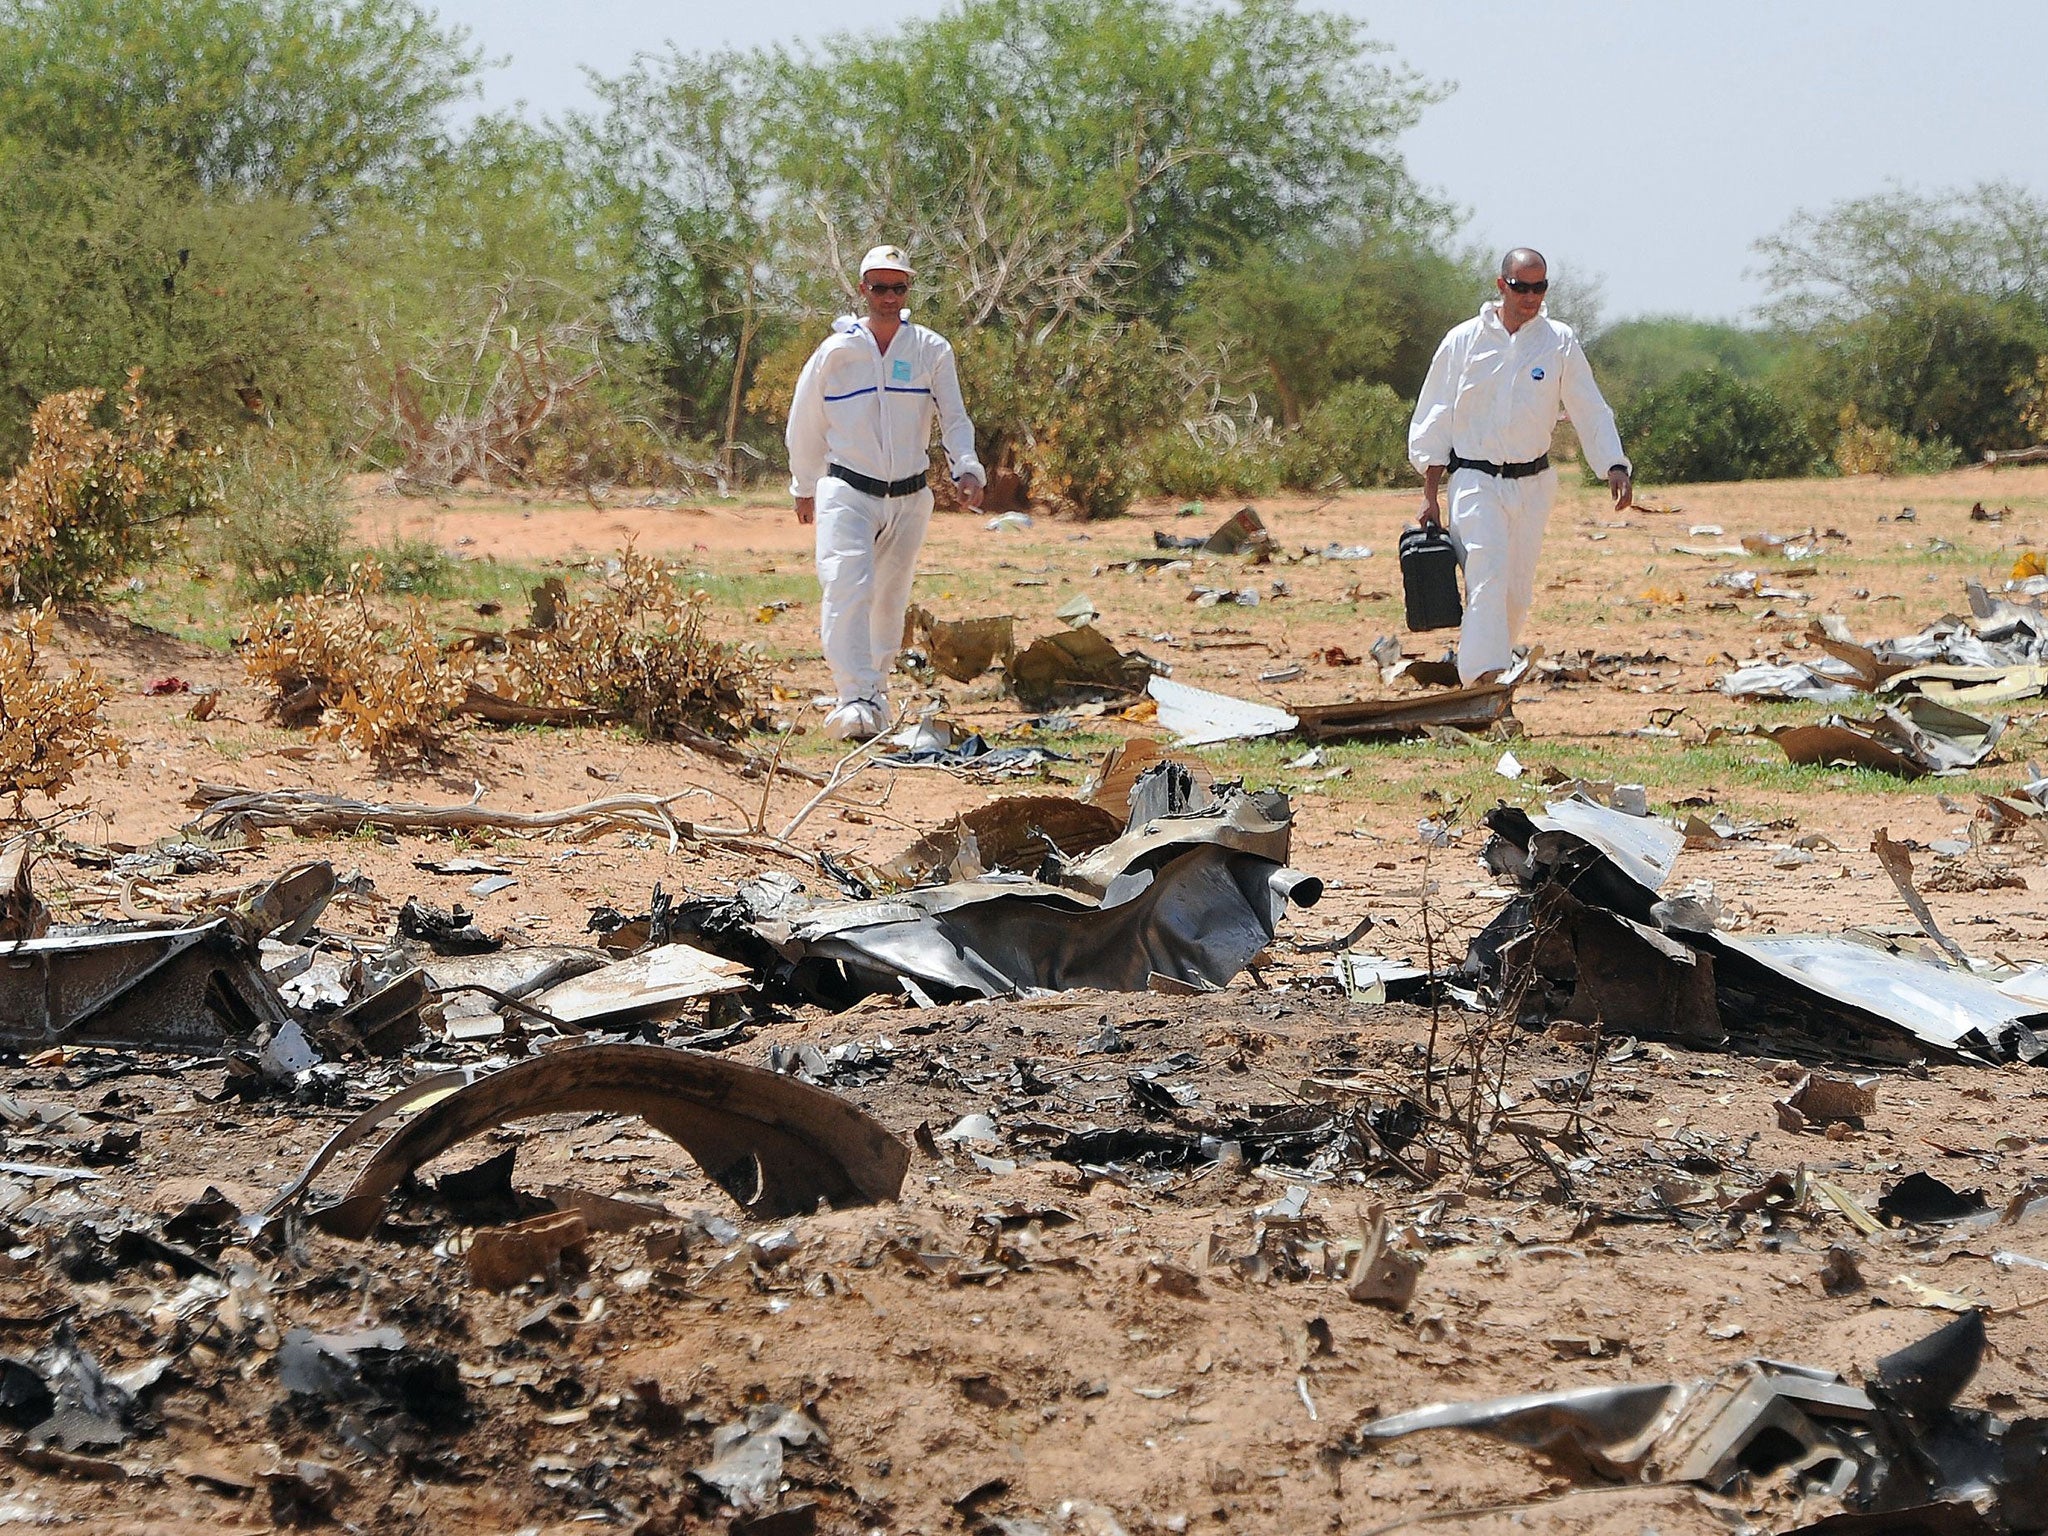 Debris from the Air Algérie aircraft crash